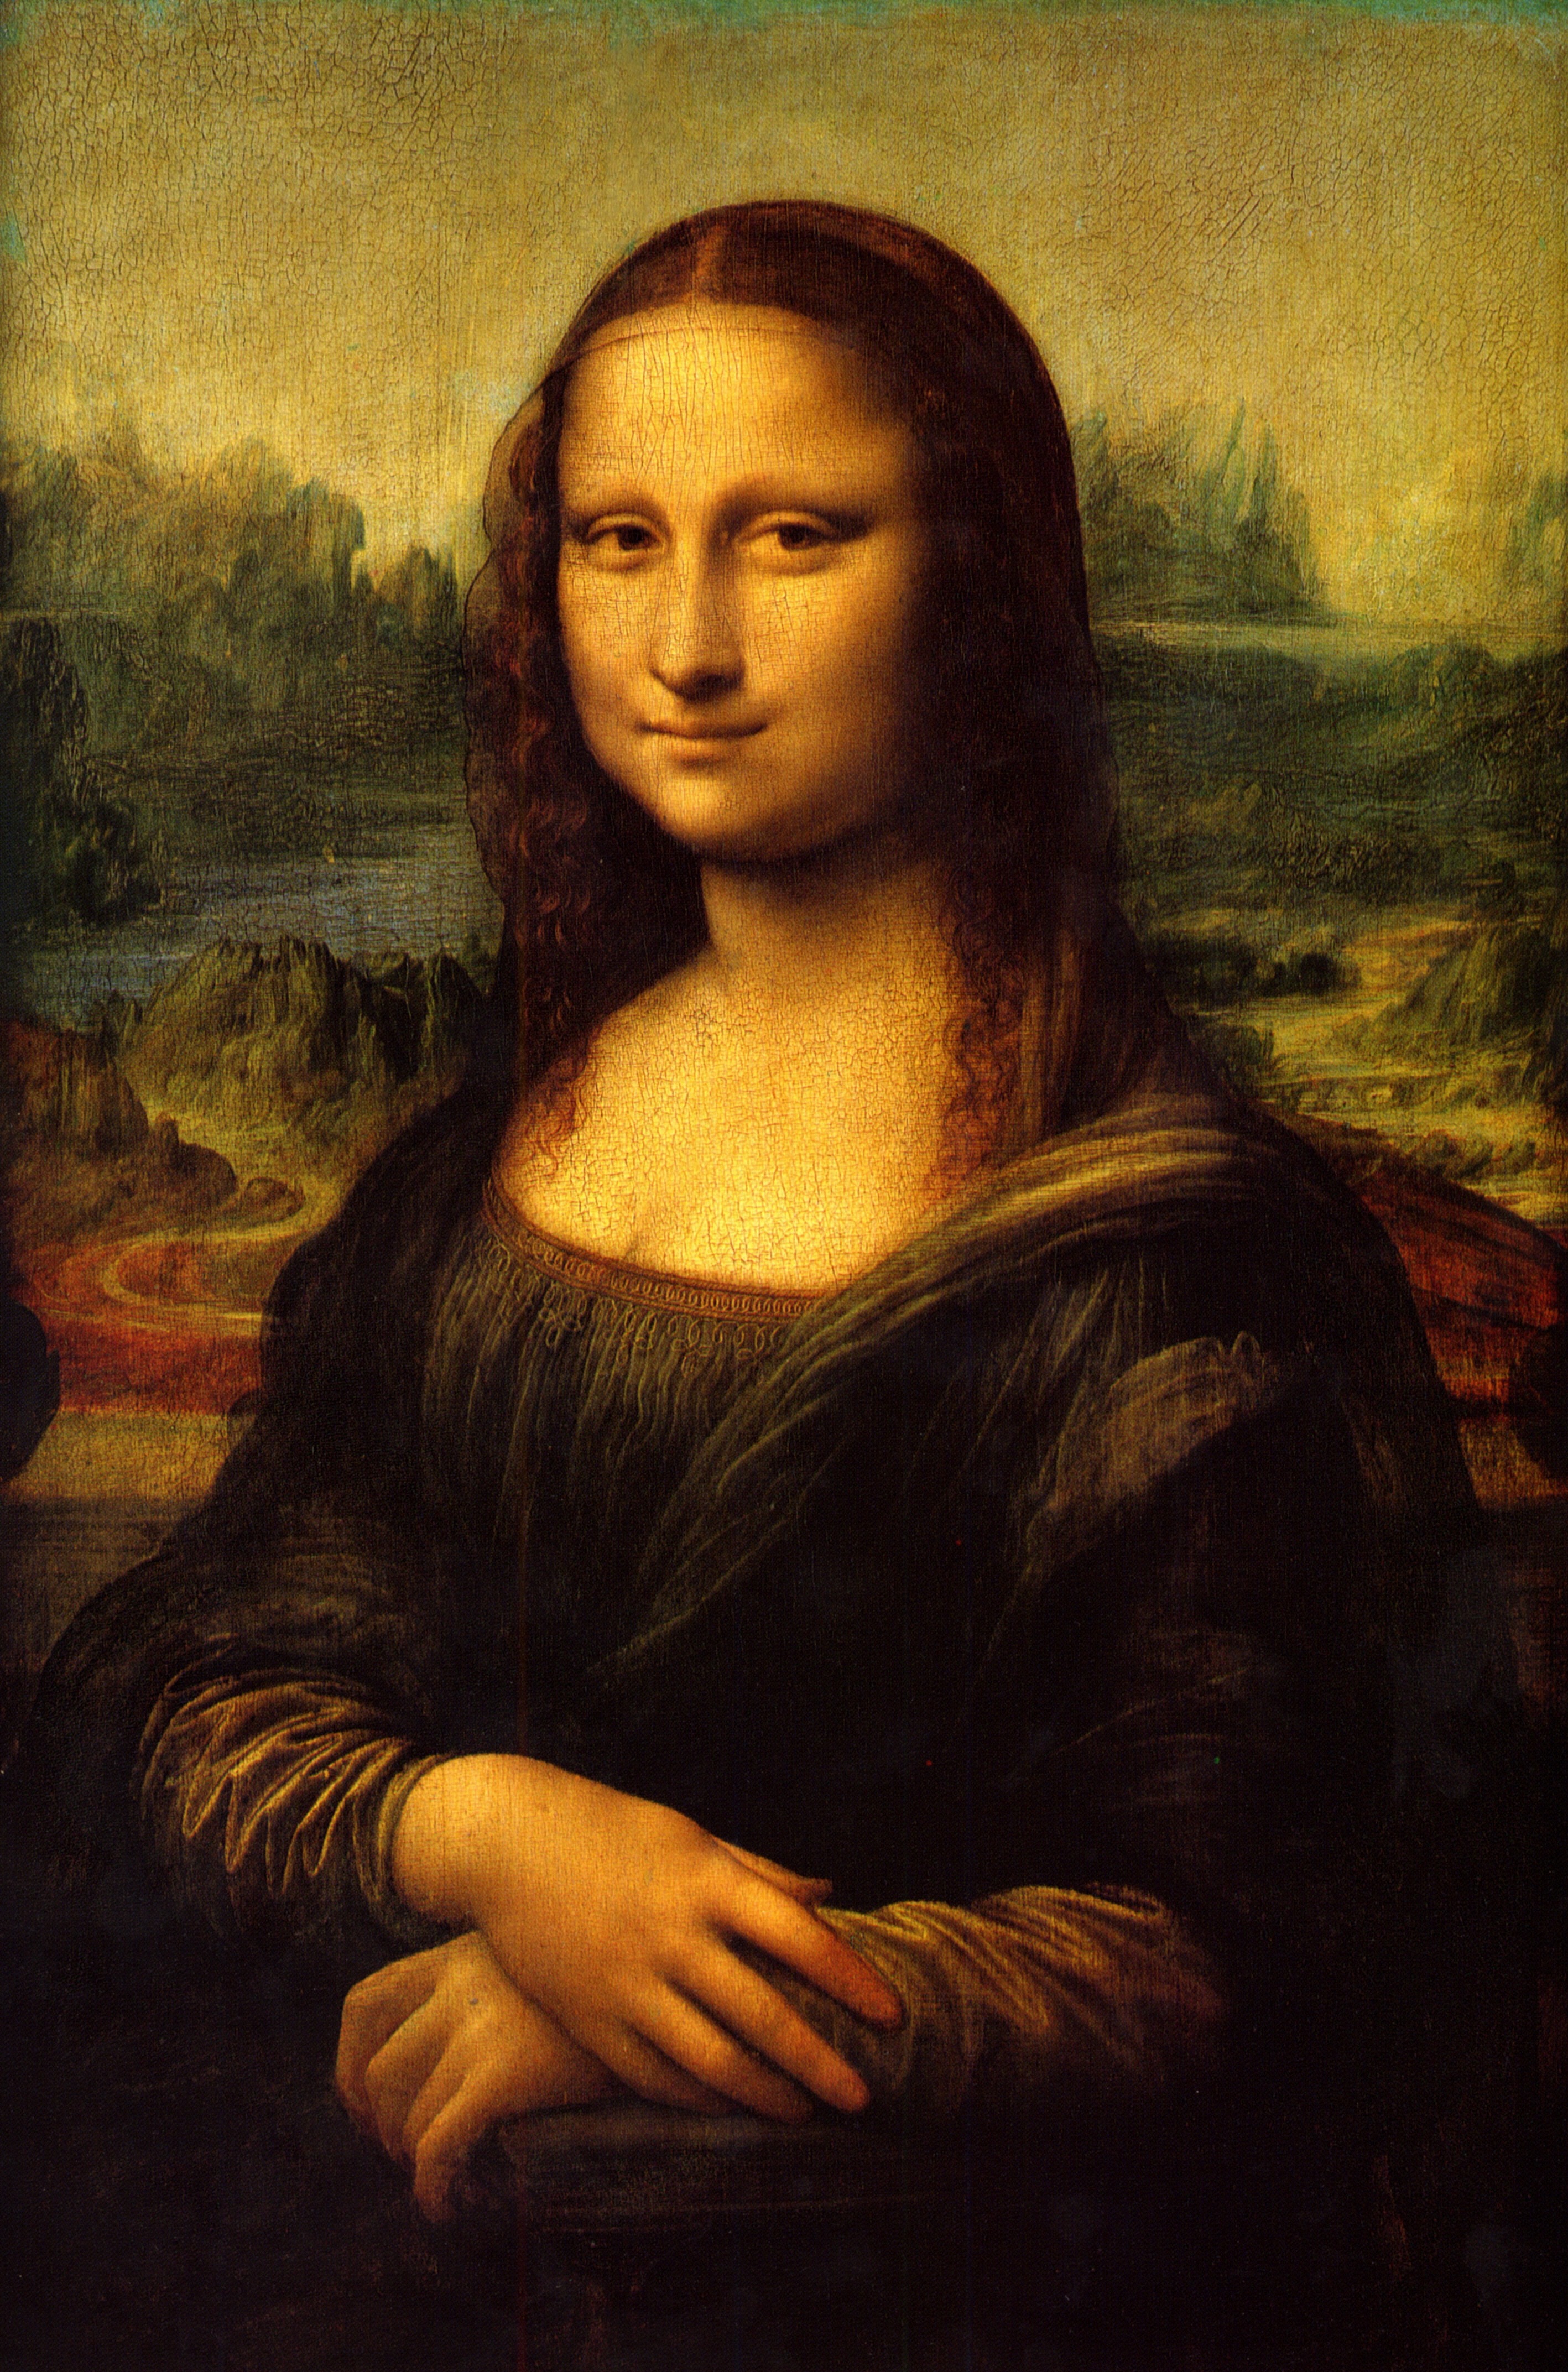 Leoardo da Vinci